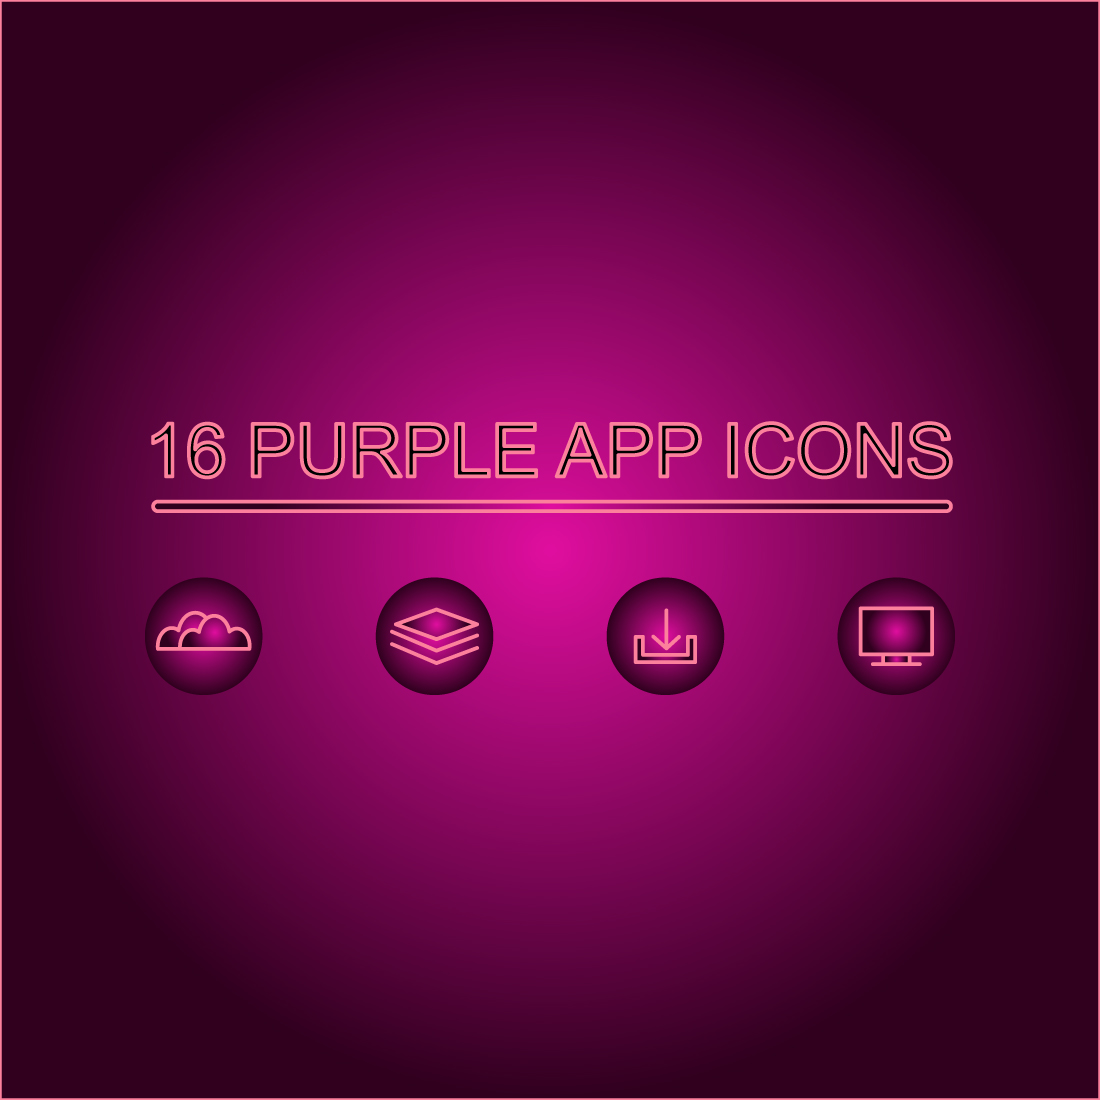 Free purple app icons main cover.